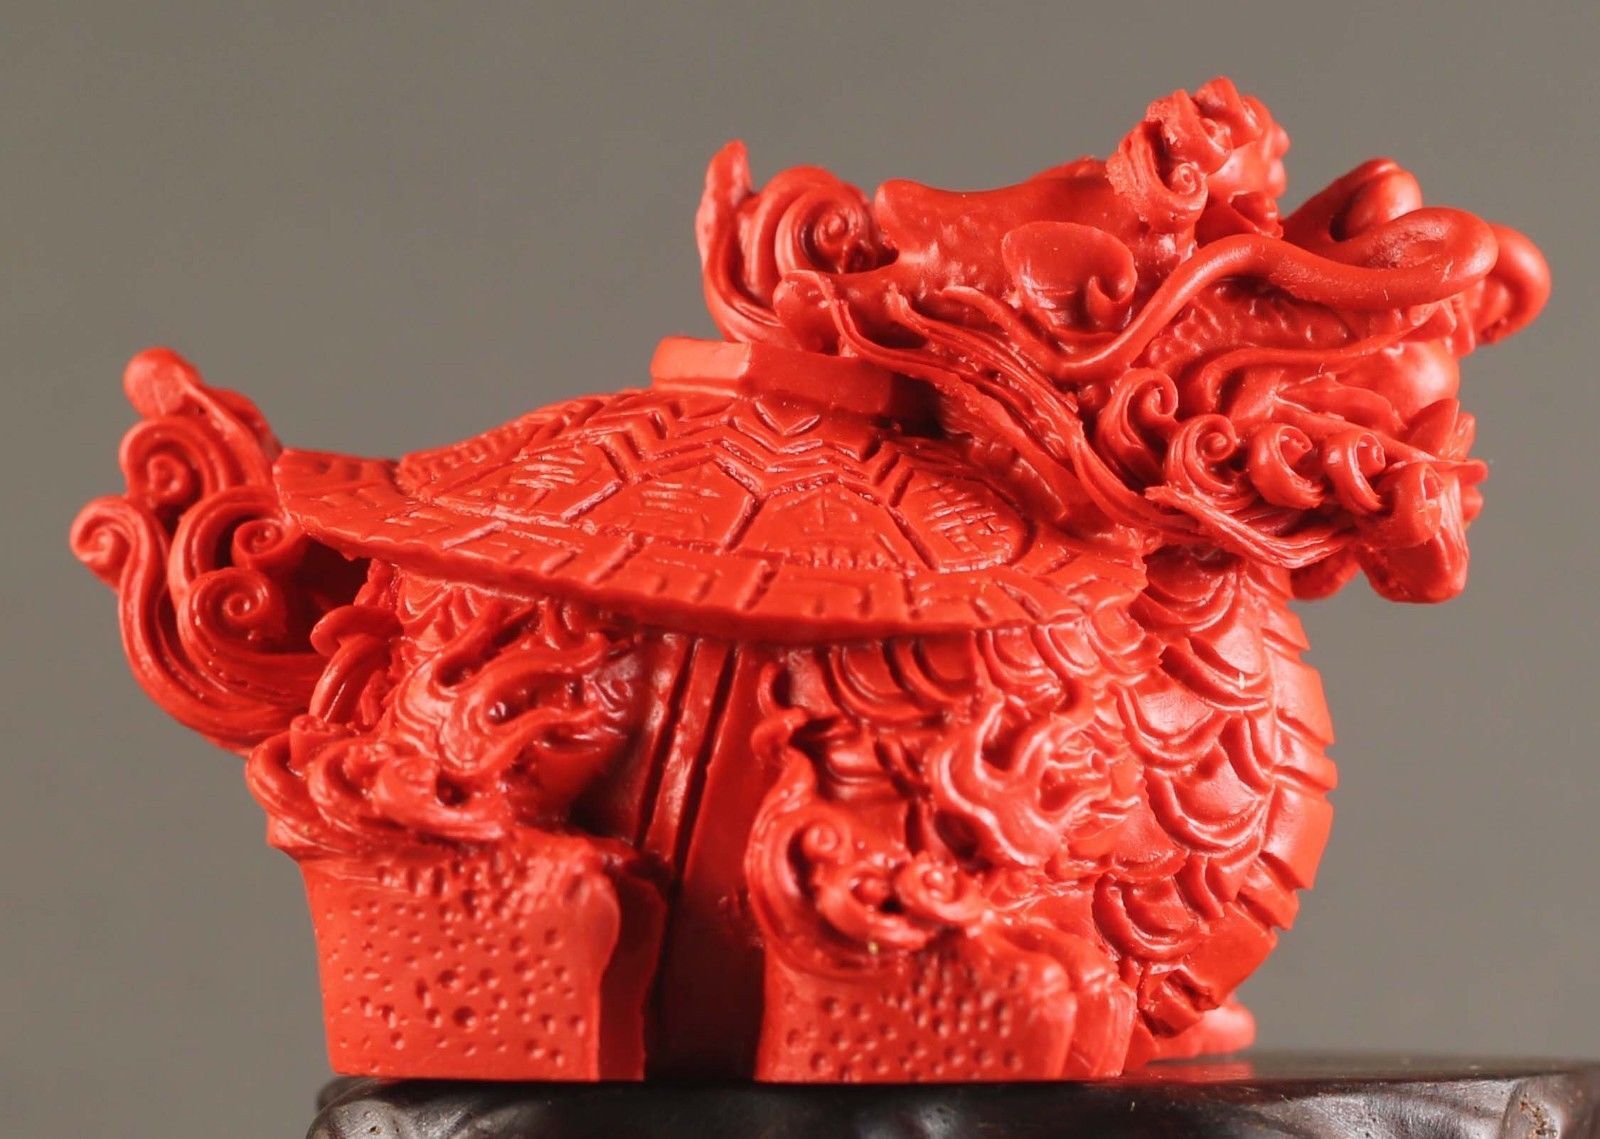 Chinese natural cinnabar red jade hand-carved dragon tortise pendant 2.2 inch Без бренда - фотография #4